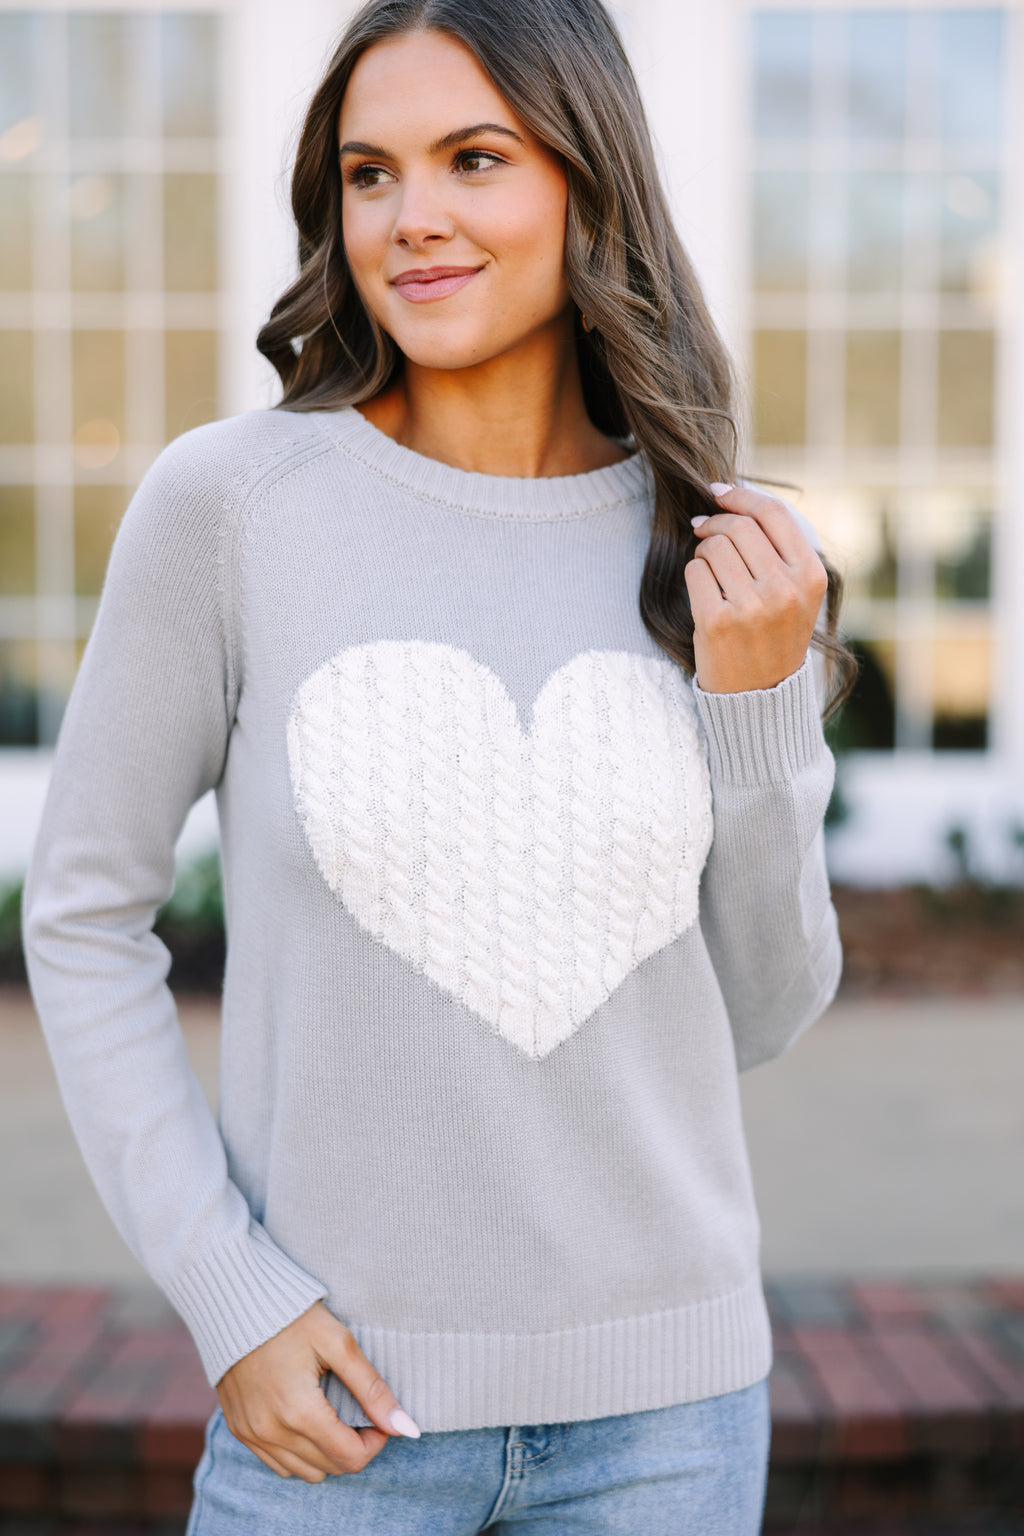 2023 Love Heart Shirt Plus Size Pullover Women Long Sleeve Tops